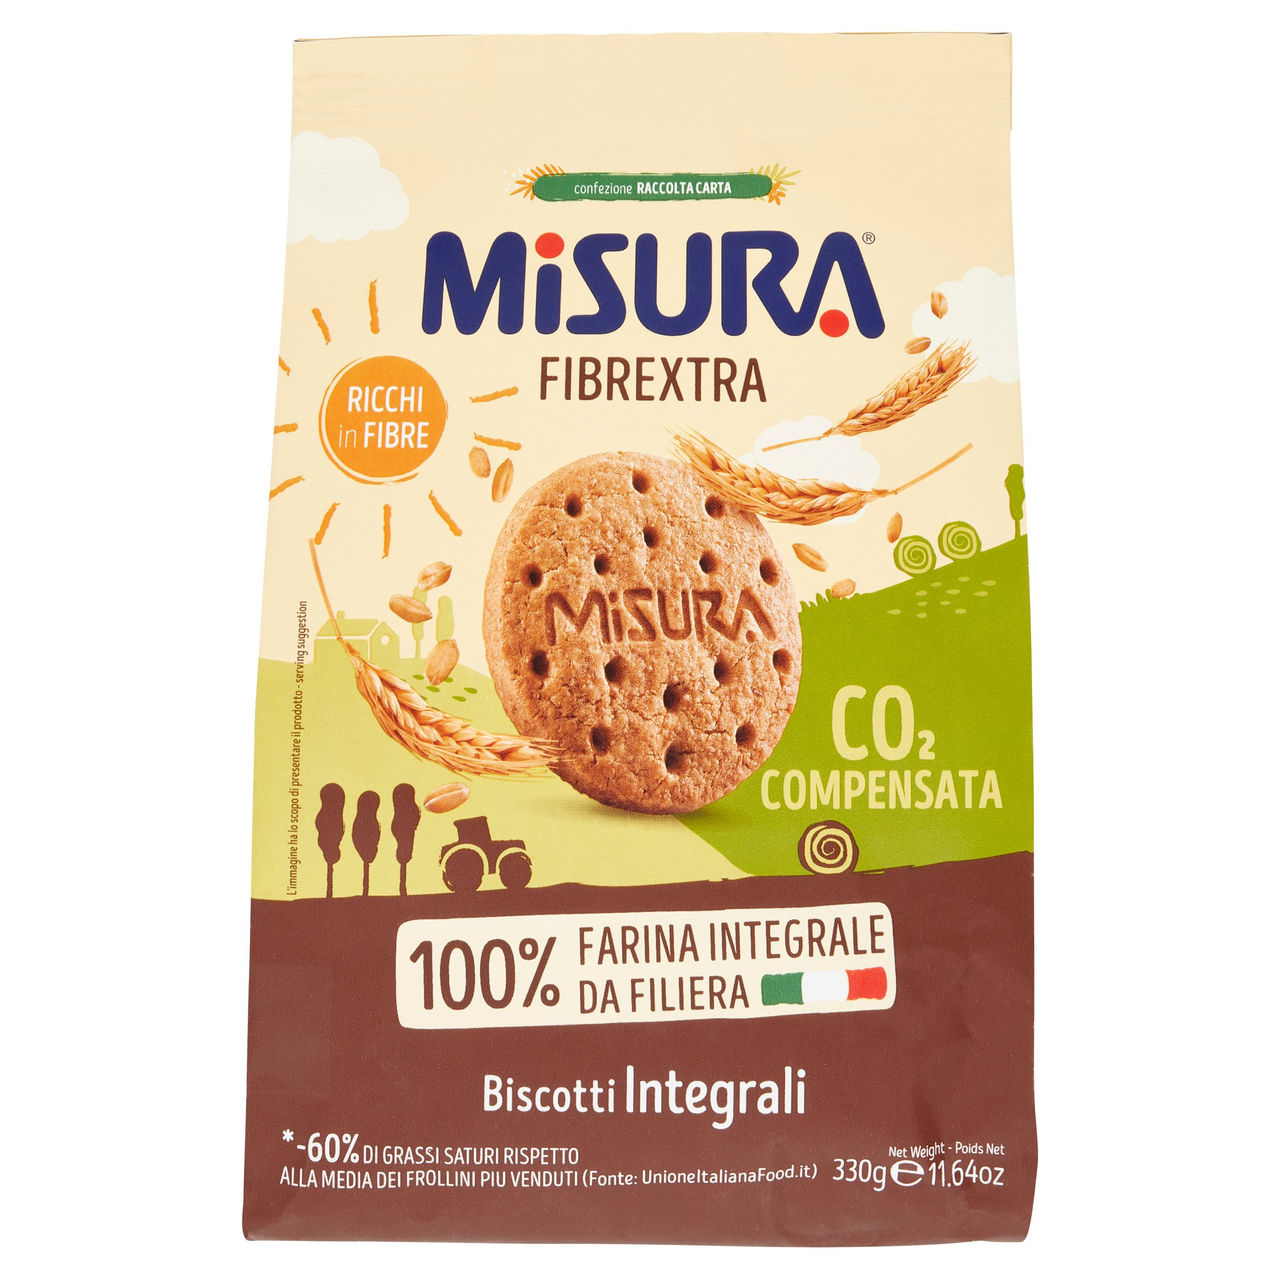 Misura Fibrextra Biscotti Integrali 330g online